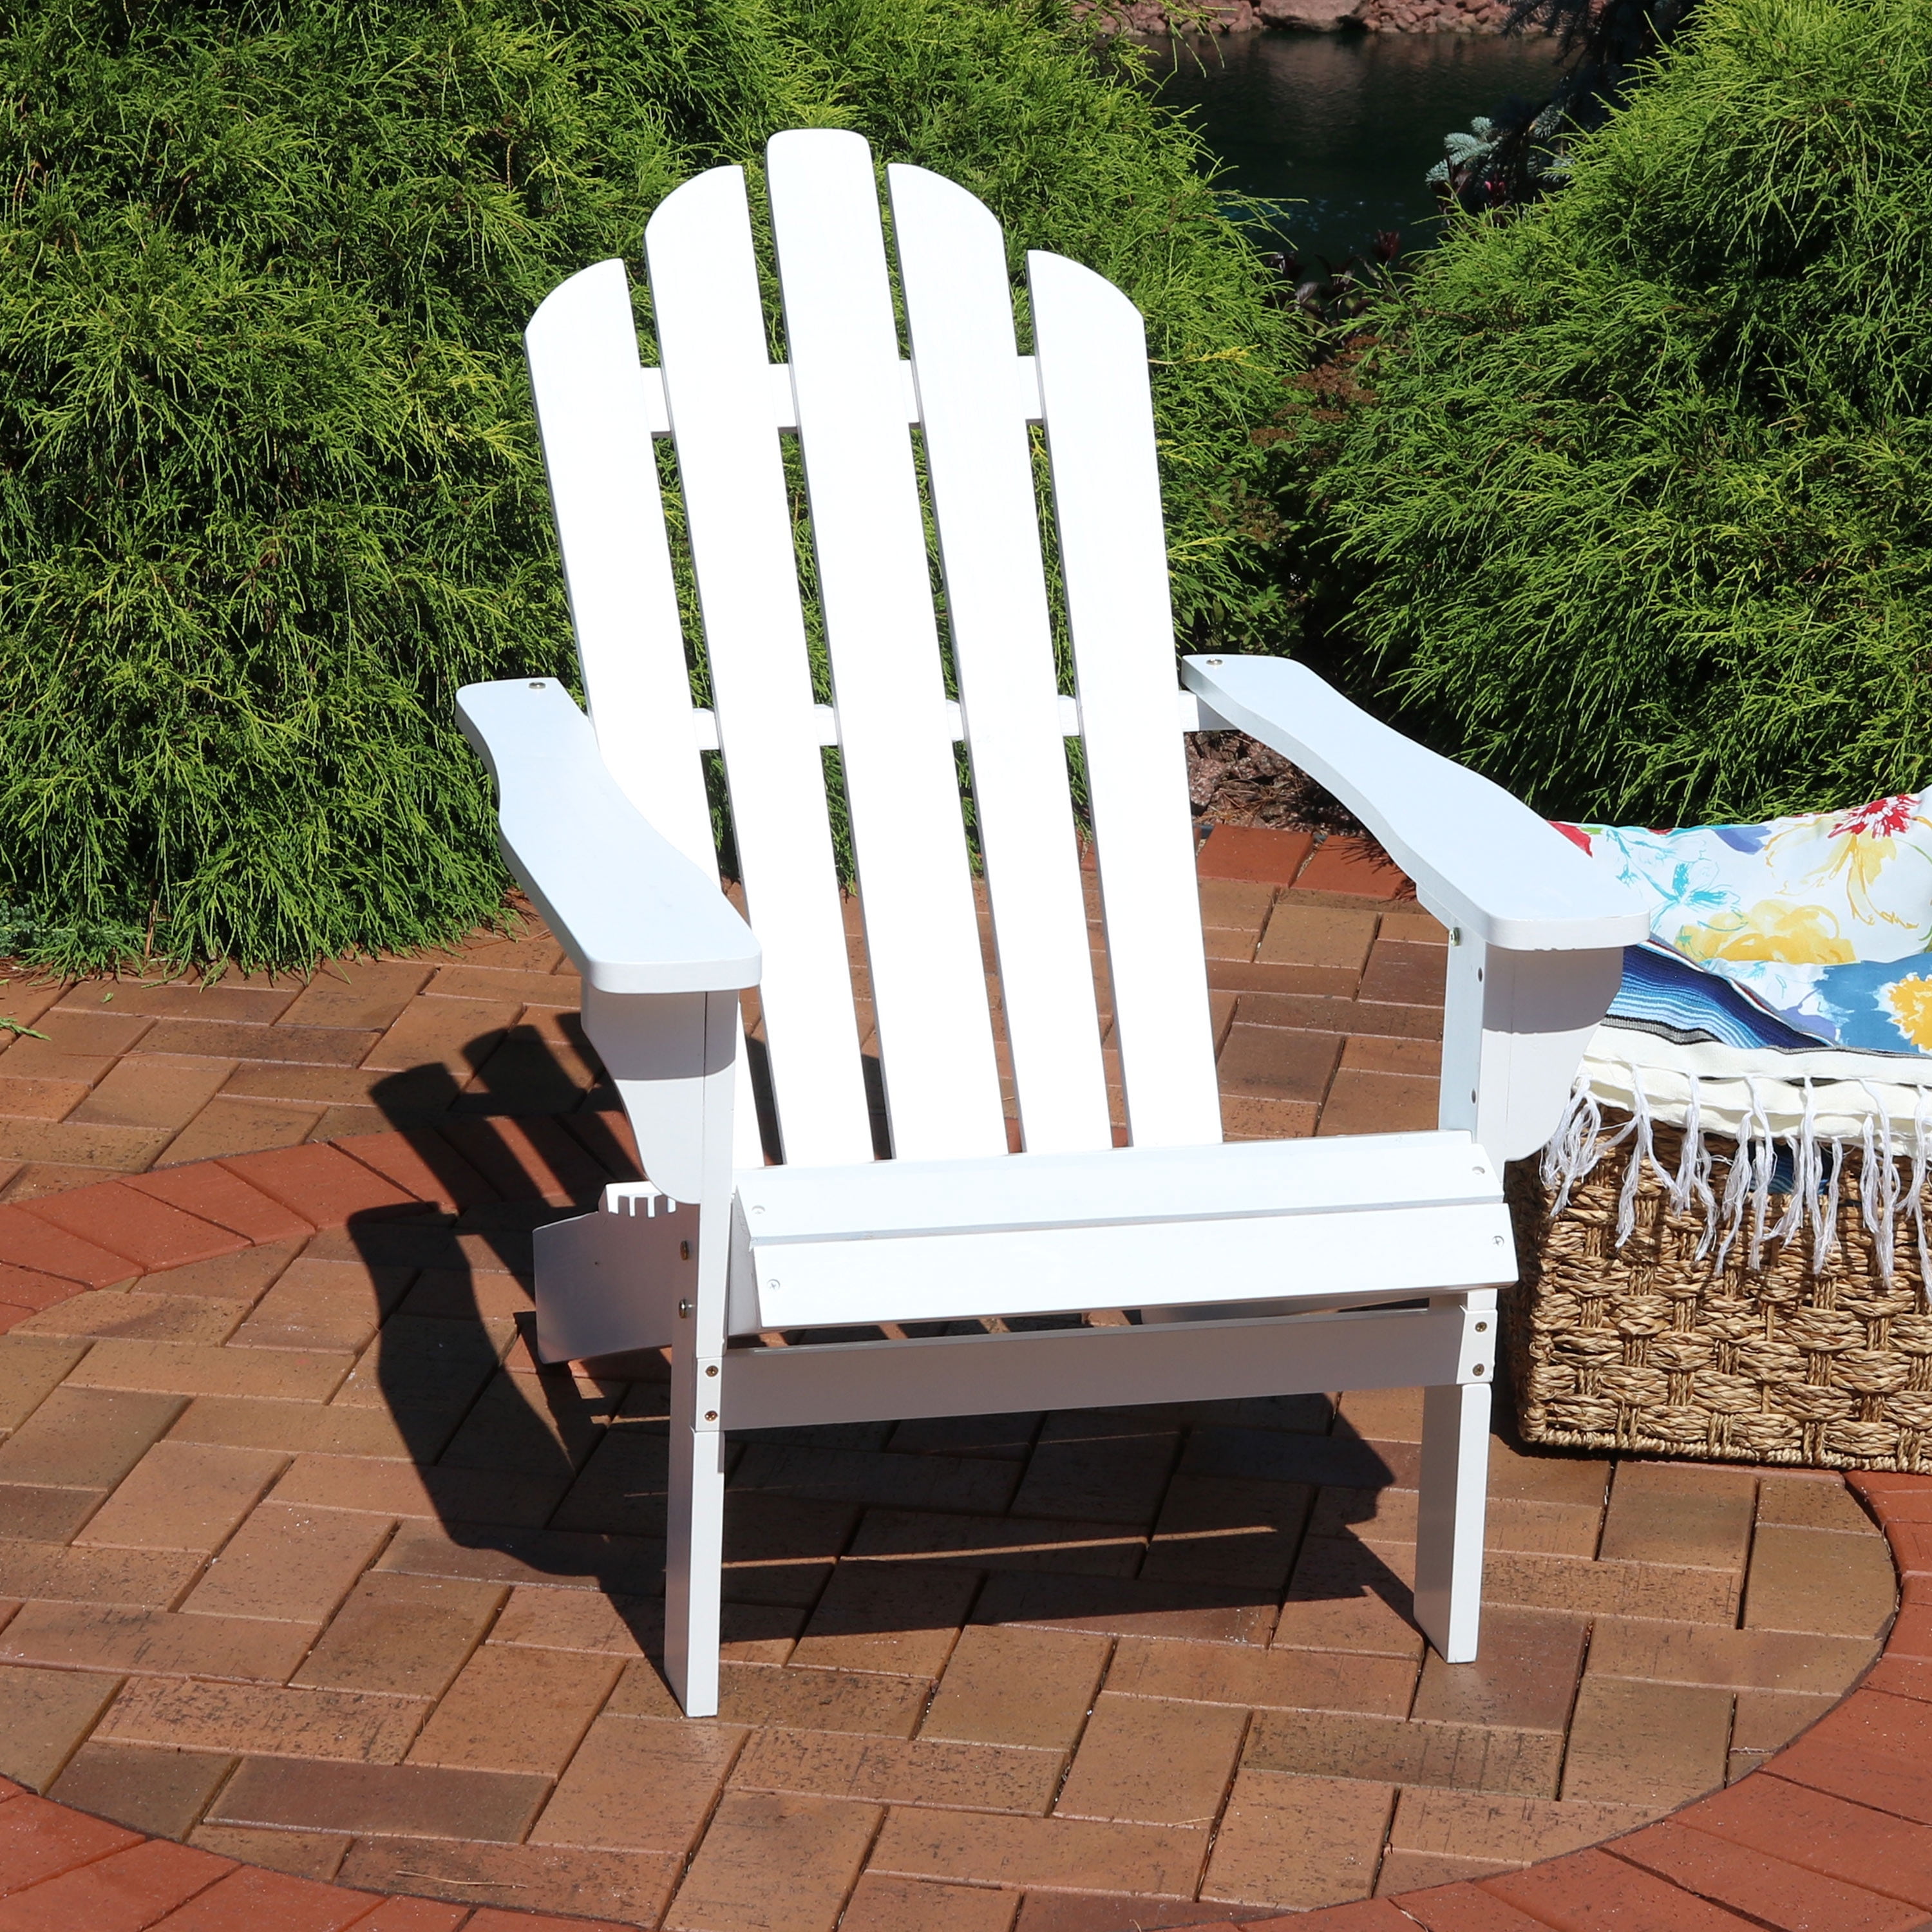 Sunnydaze Outdoor Wood Adirondack Patio Chair, White - Walmart.com